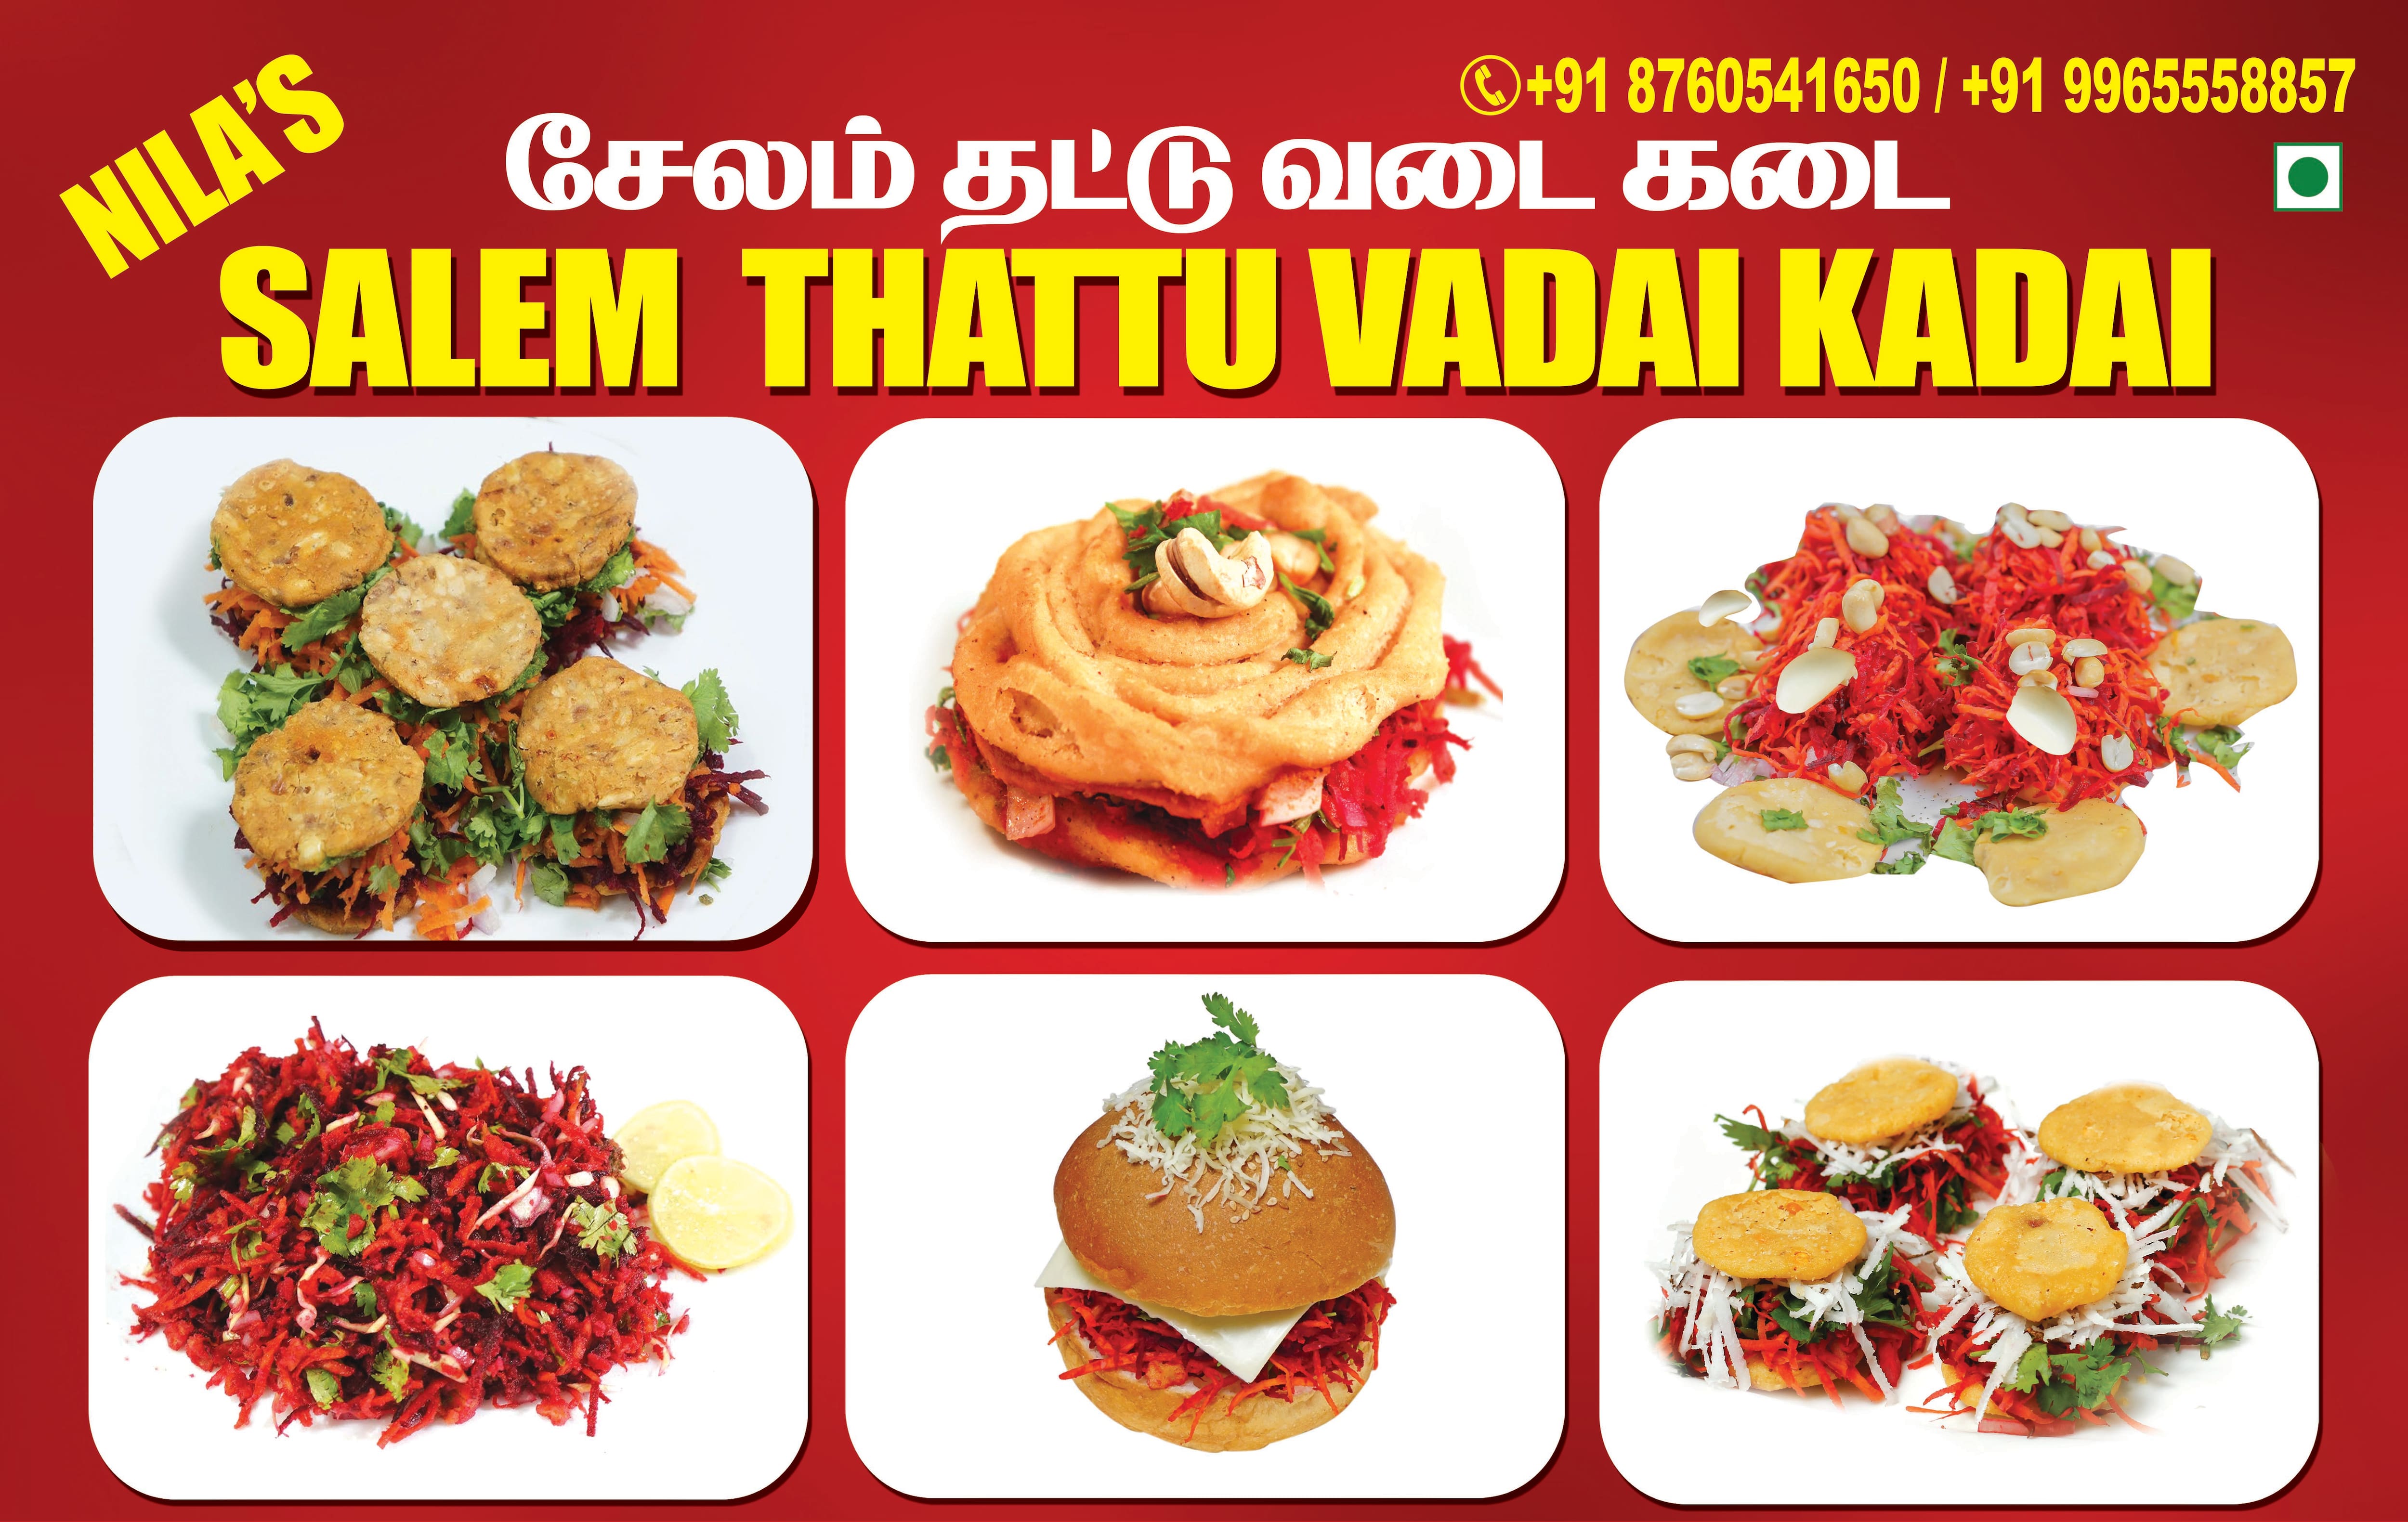 Nila's Salem Thattu Vadai Kadai, Medavakkam order online - Zomato